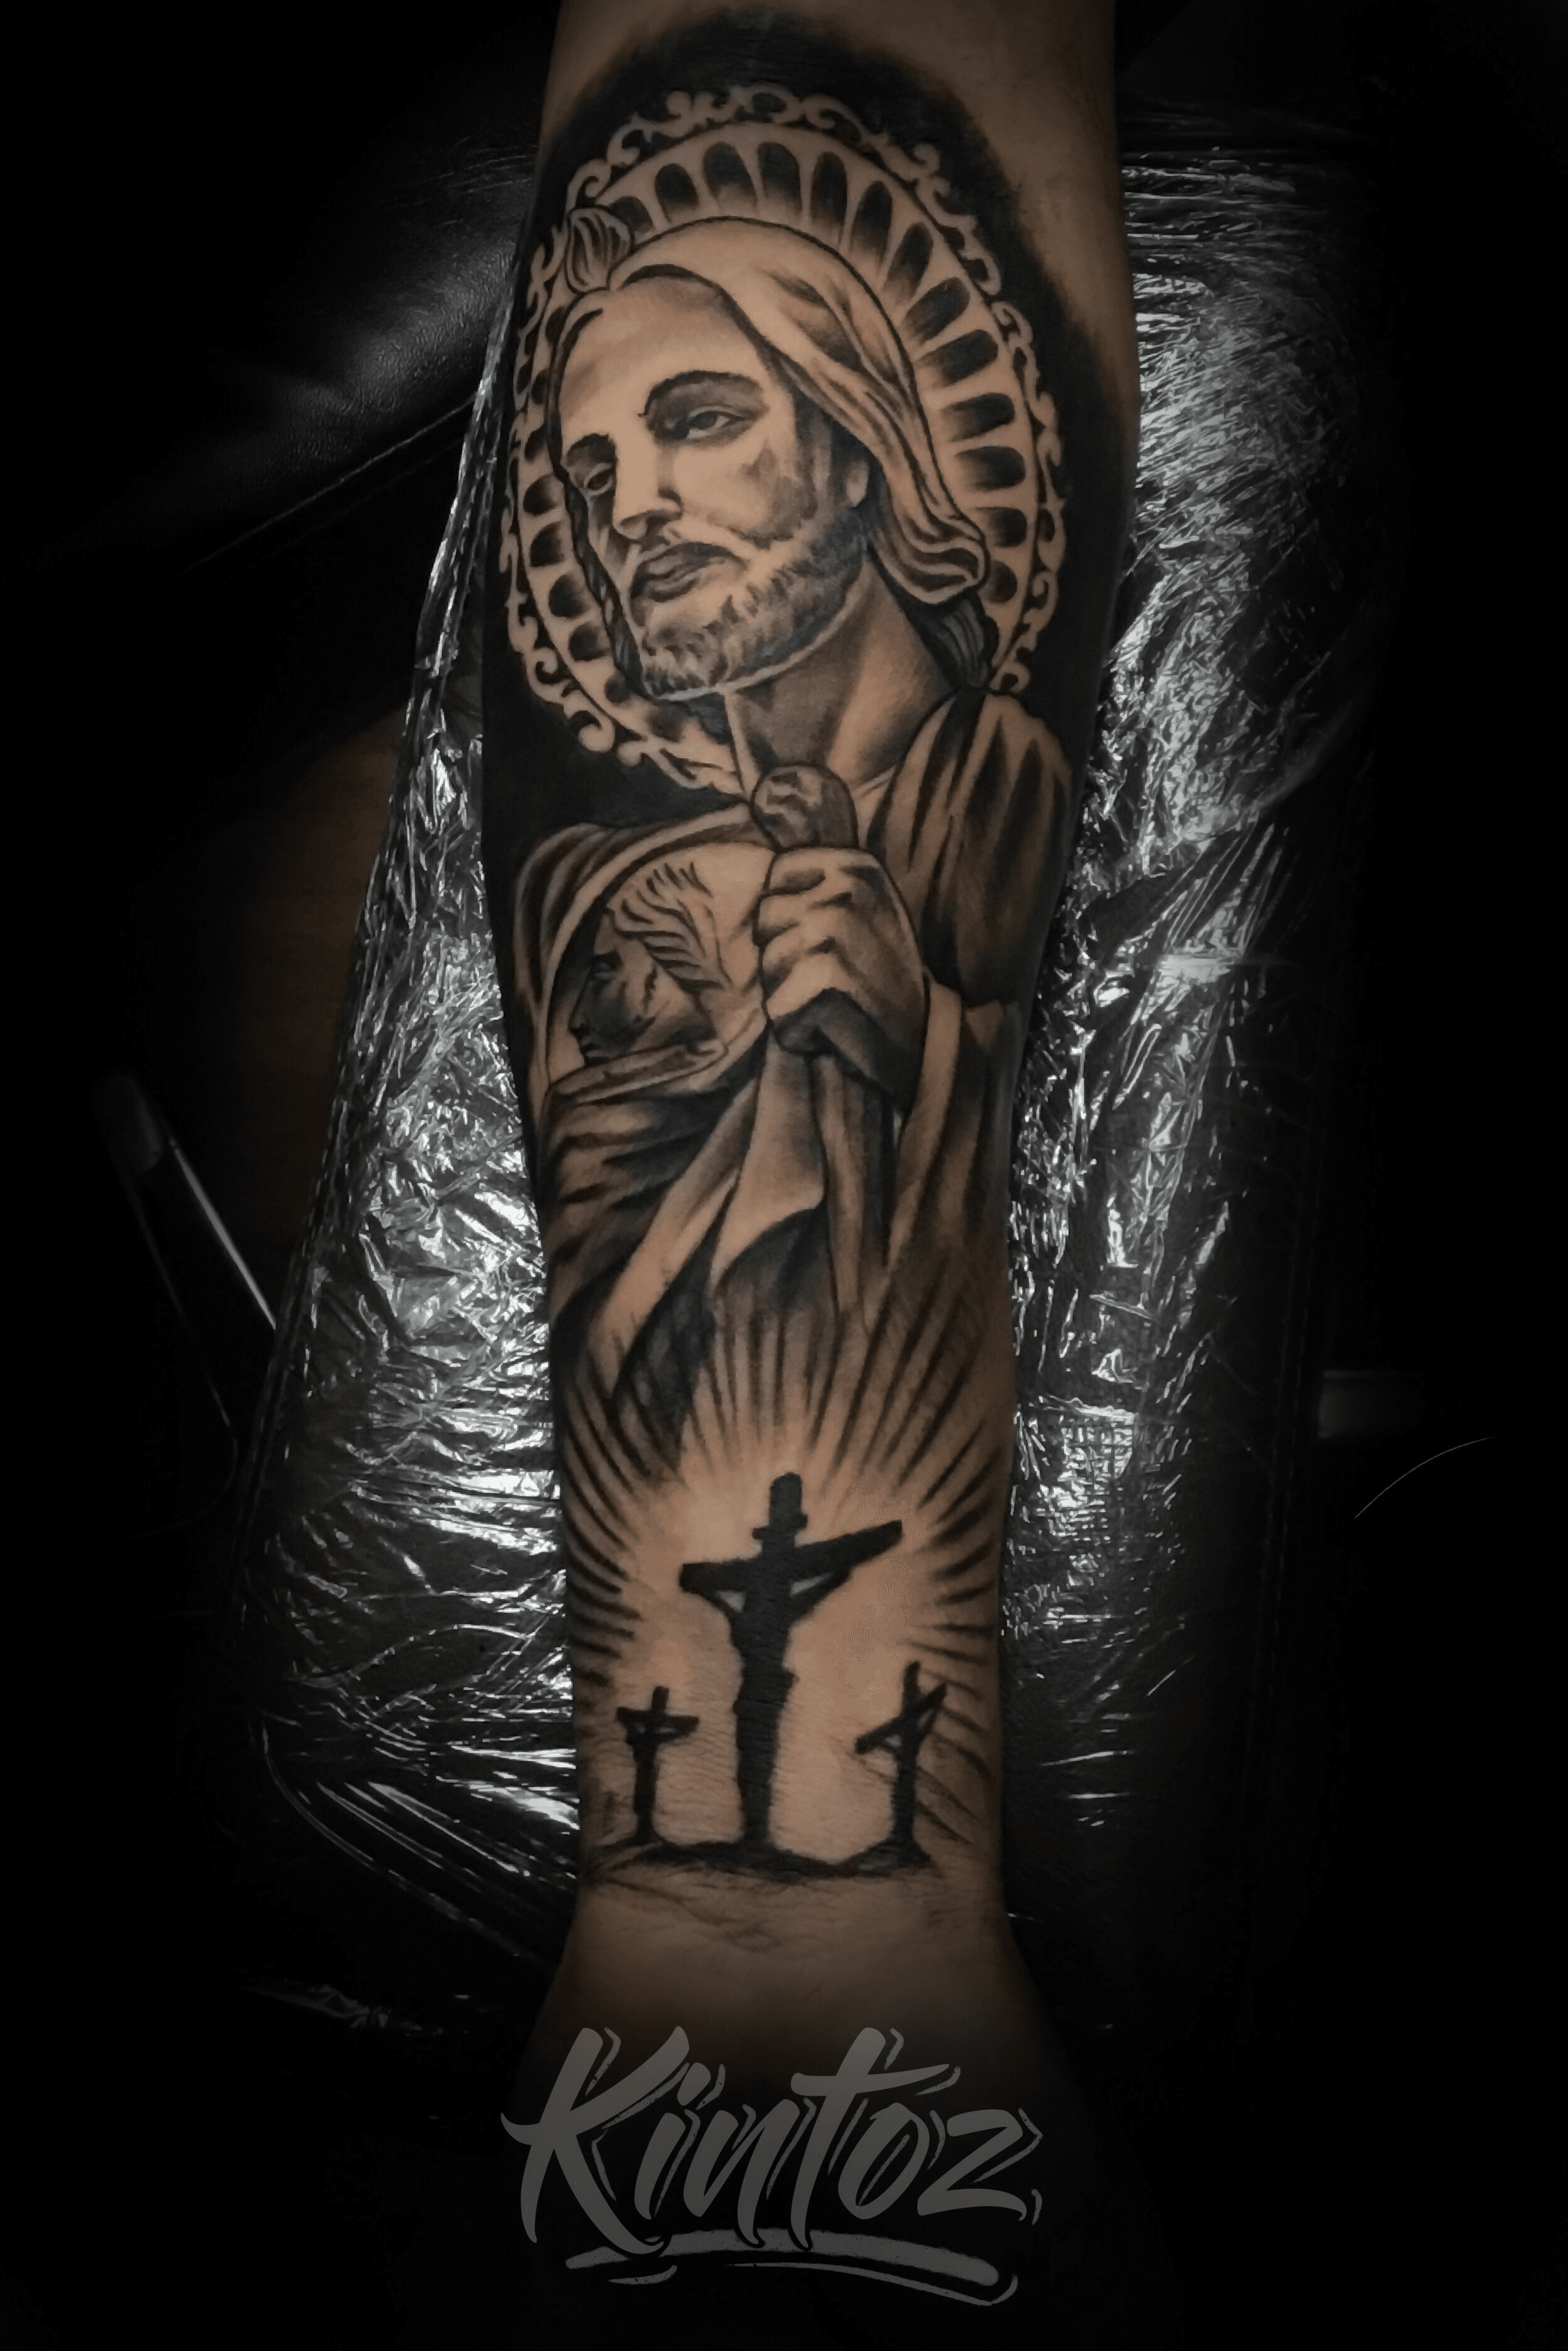 San Judas Tattoo Images  Wallmost